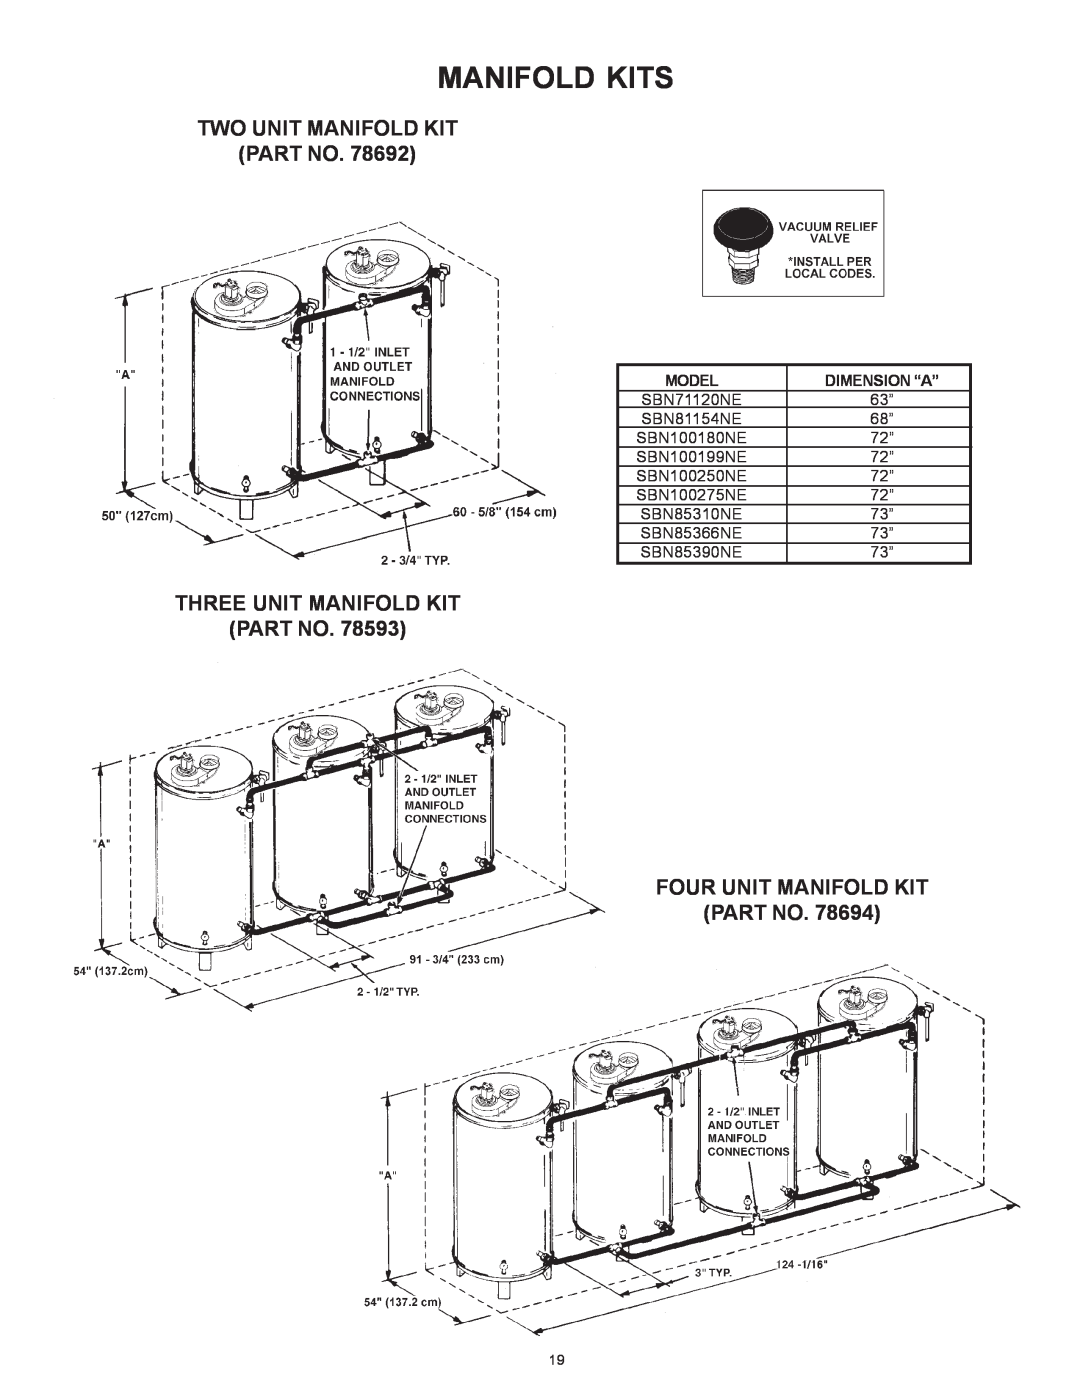 State Industries SBN85390NE/A Manifold Kits, Two Unit Manifold Kit, Three Unit Manifold Kit, Four Unit Manifold Kit 